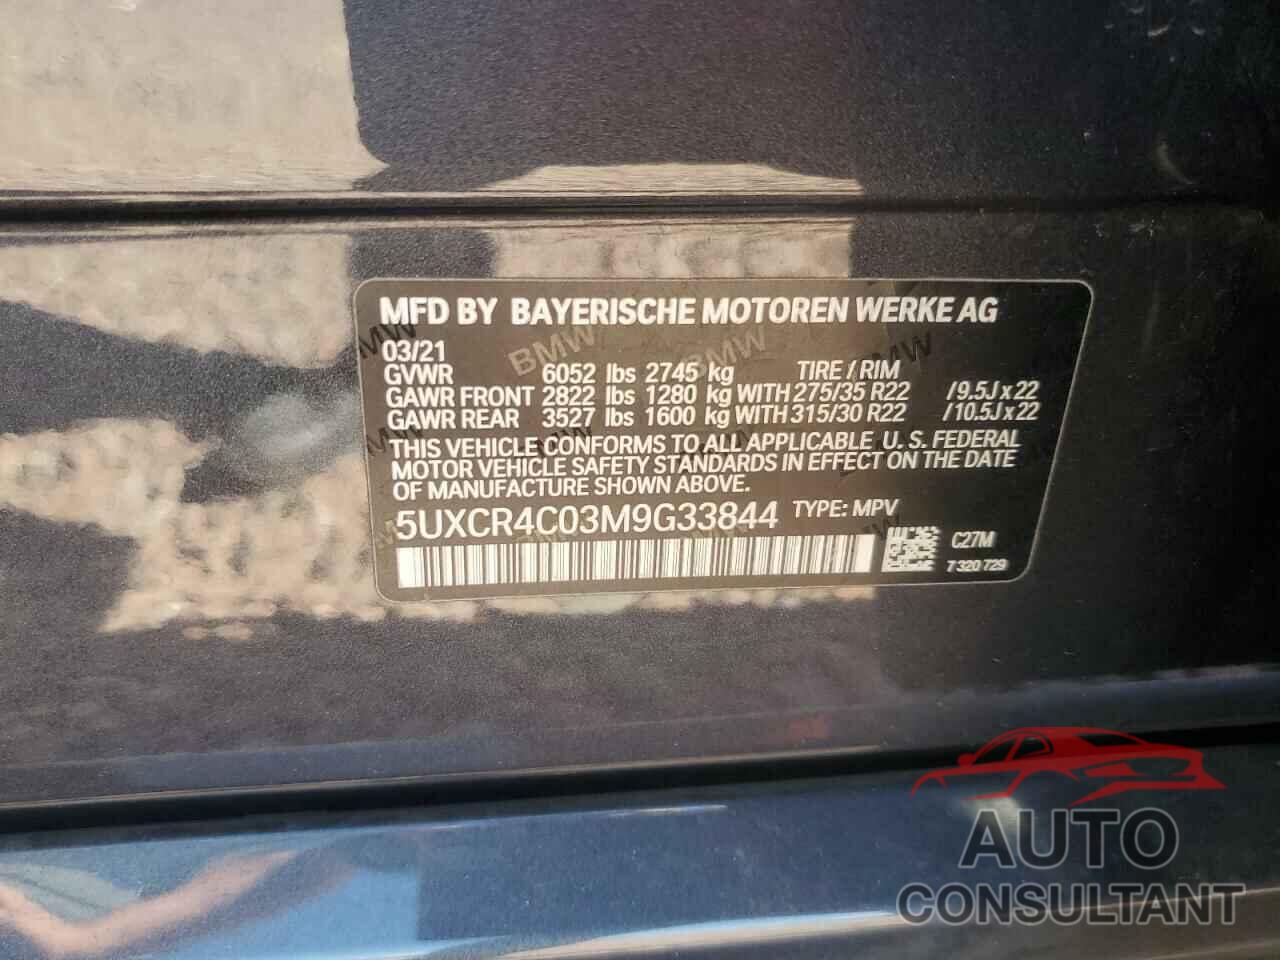 BMW X5 2021 - 5UXCR4C03M9G33844